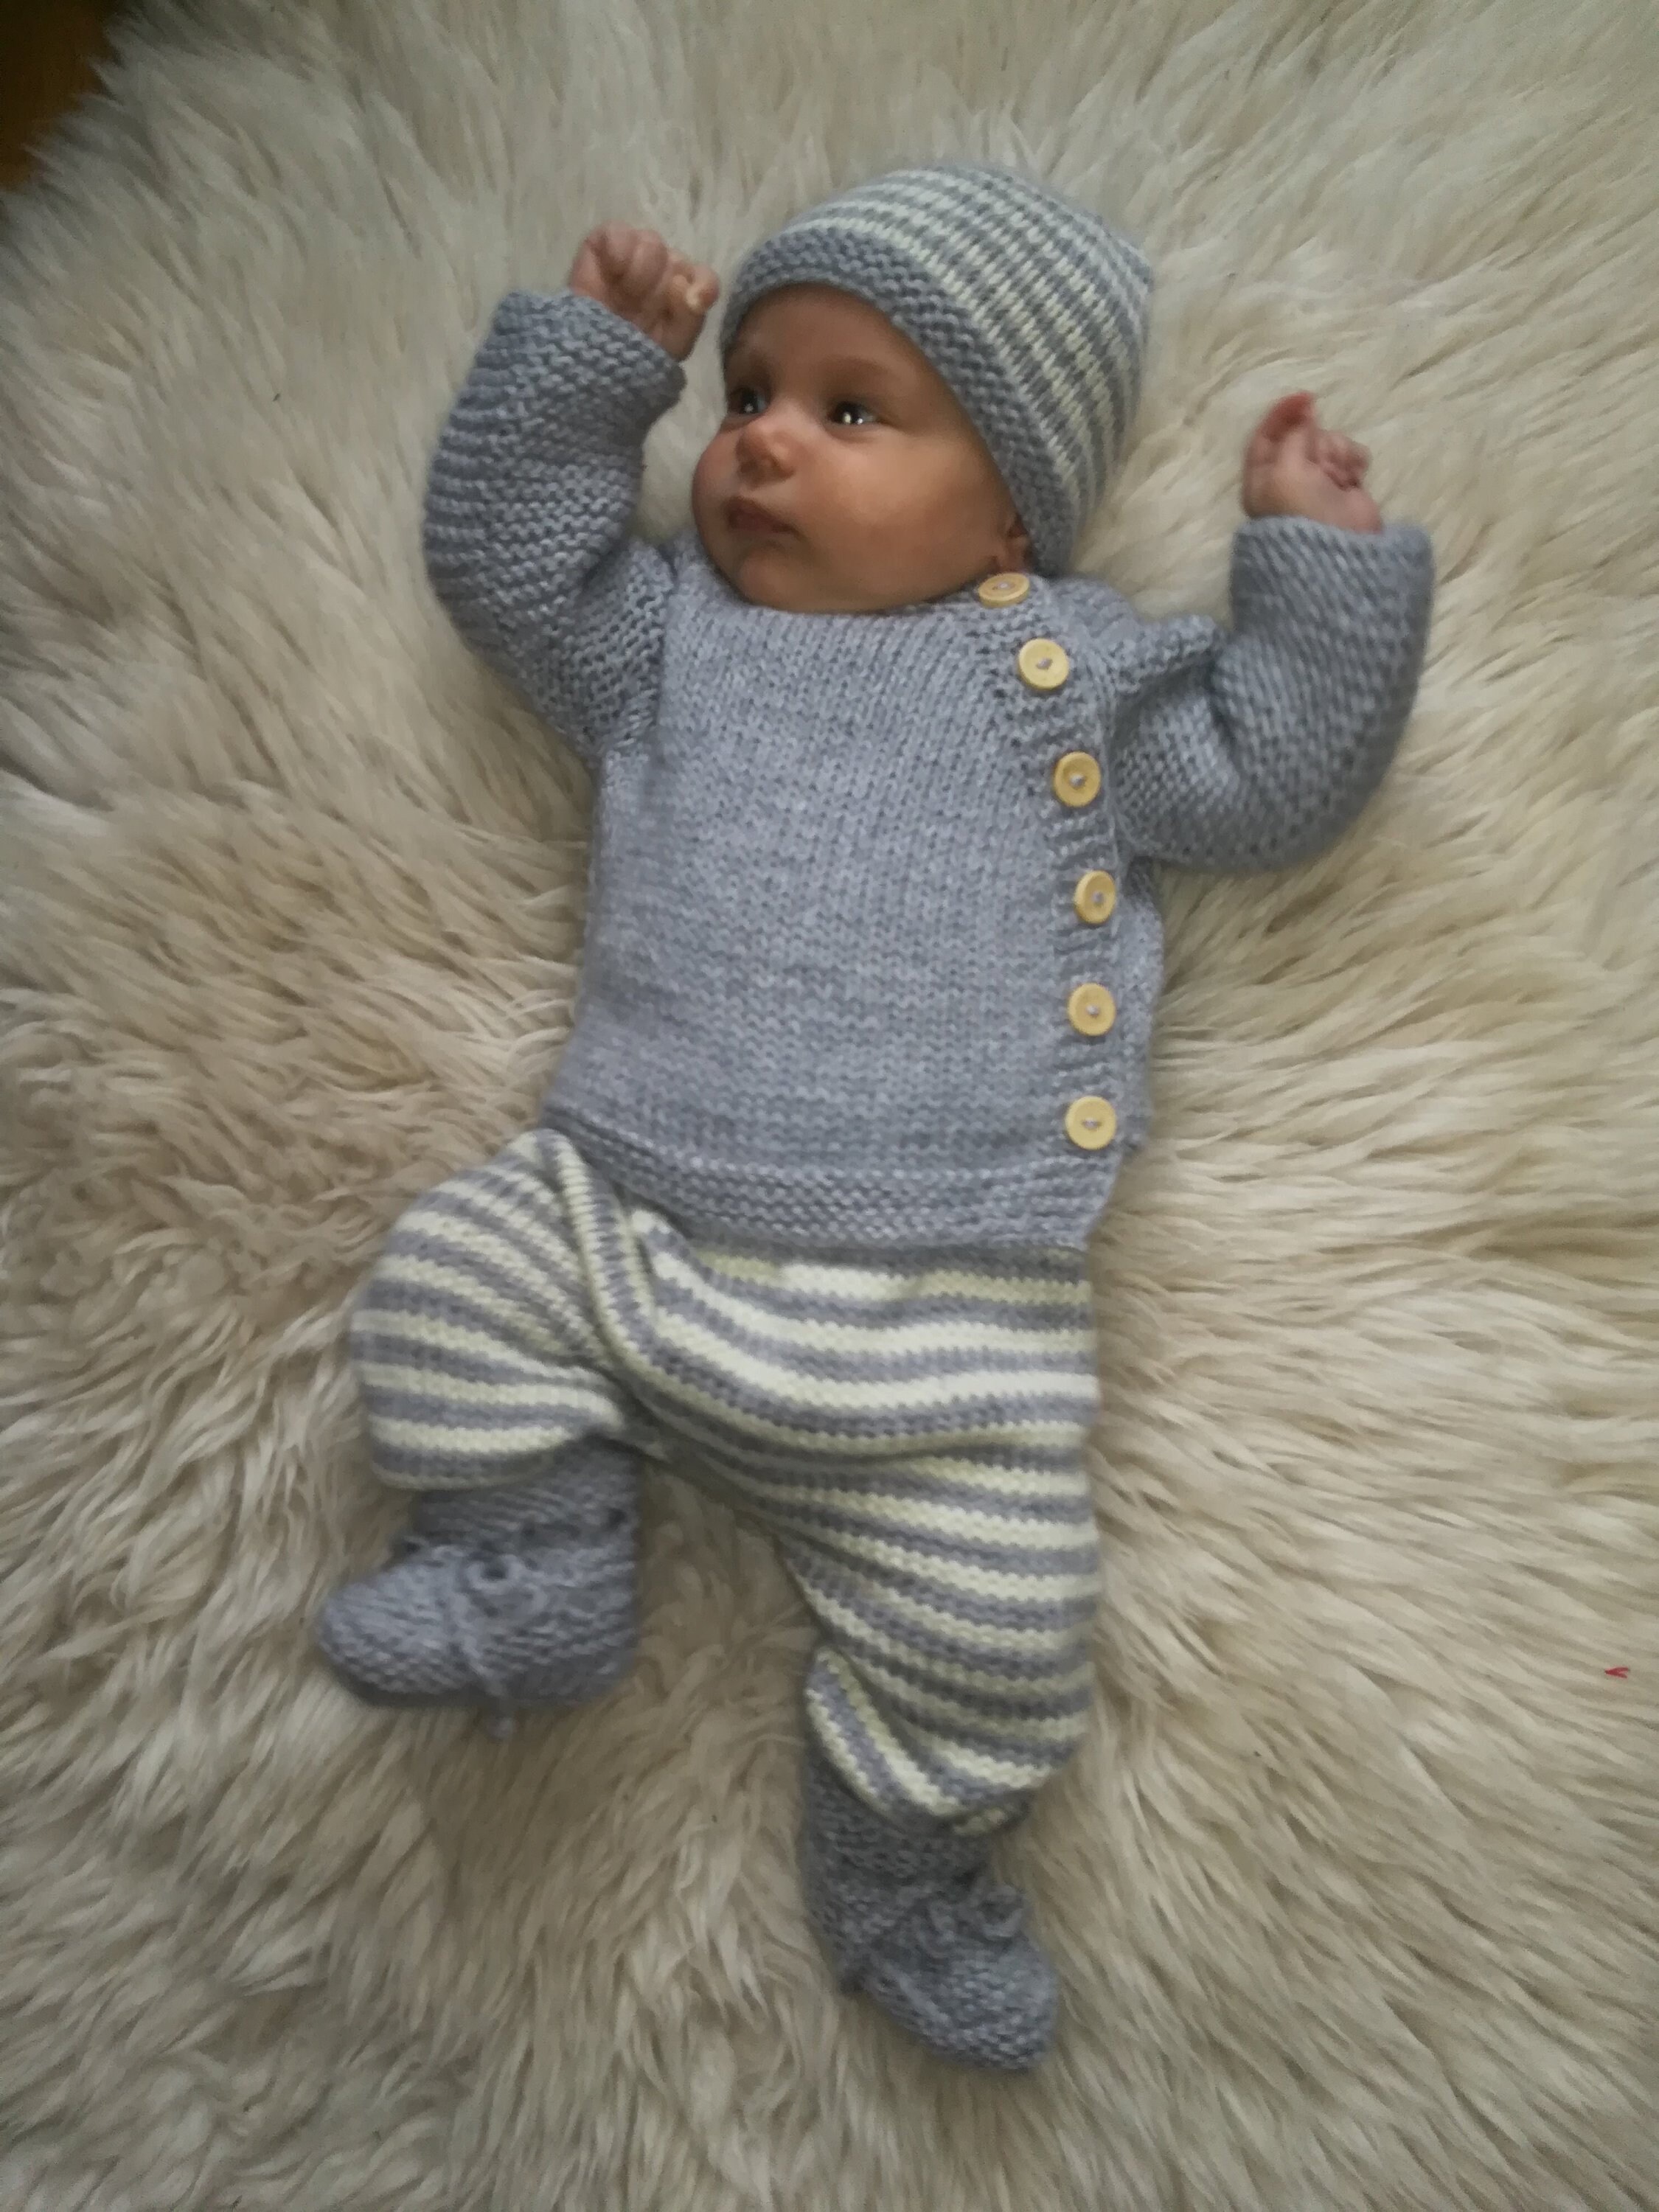 Baby newborn knitted set Clothing Unisex Kids Clothing Clothing Sets baby socks baby knit outfit baby shower gift merino wool romper newborn gift cardigan with buttons 